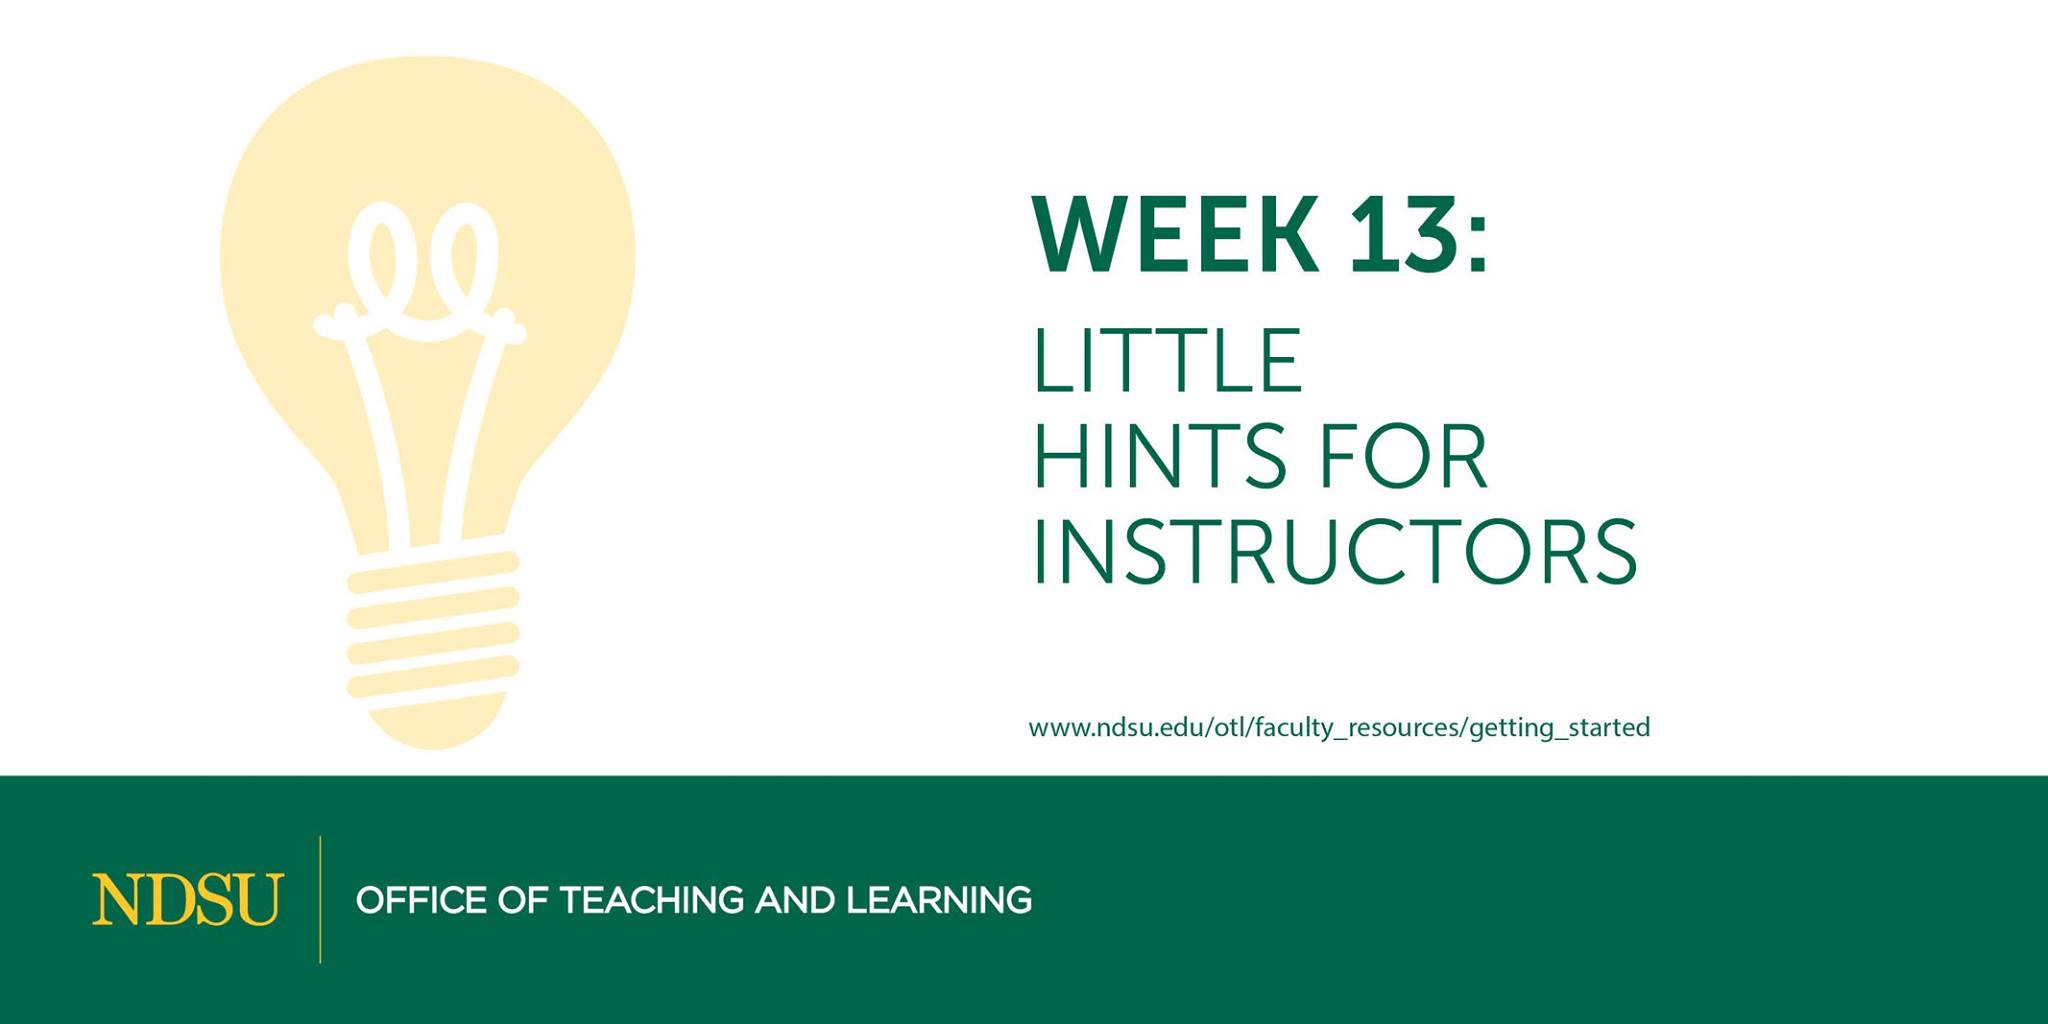 Week 13 Little Hints for Instructors